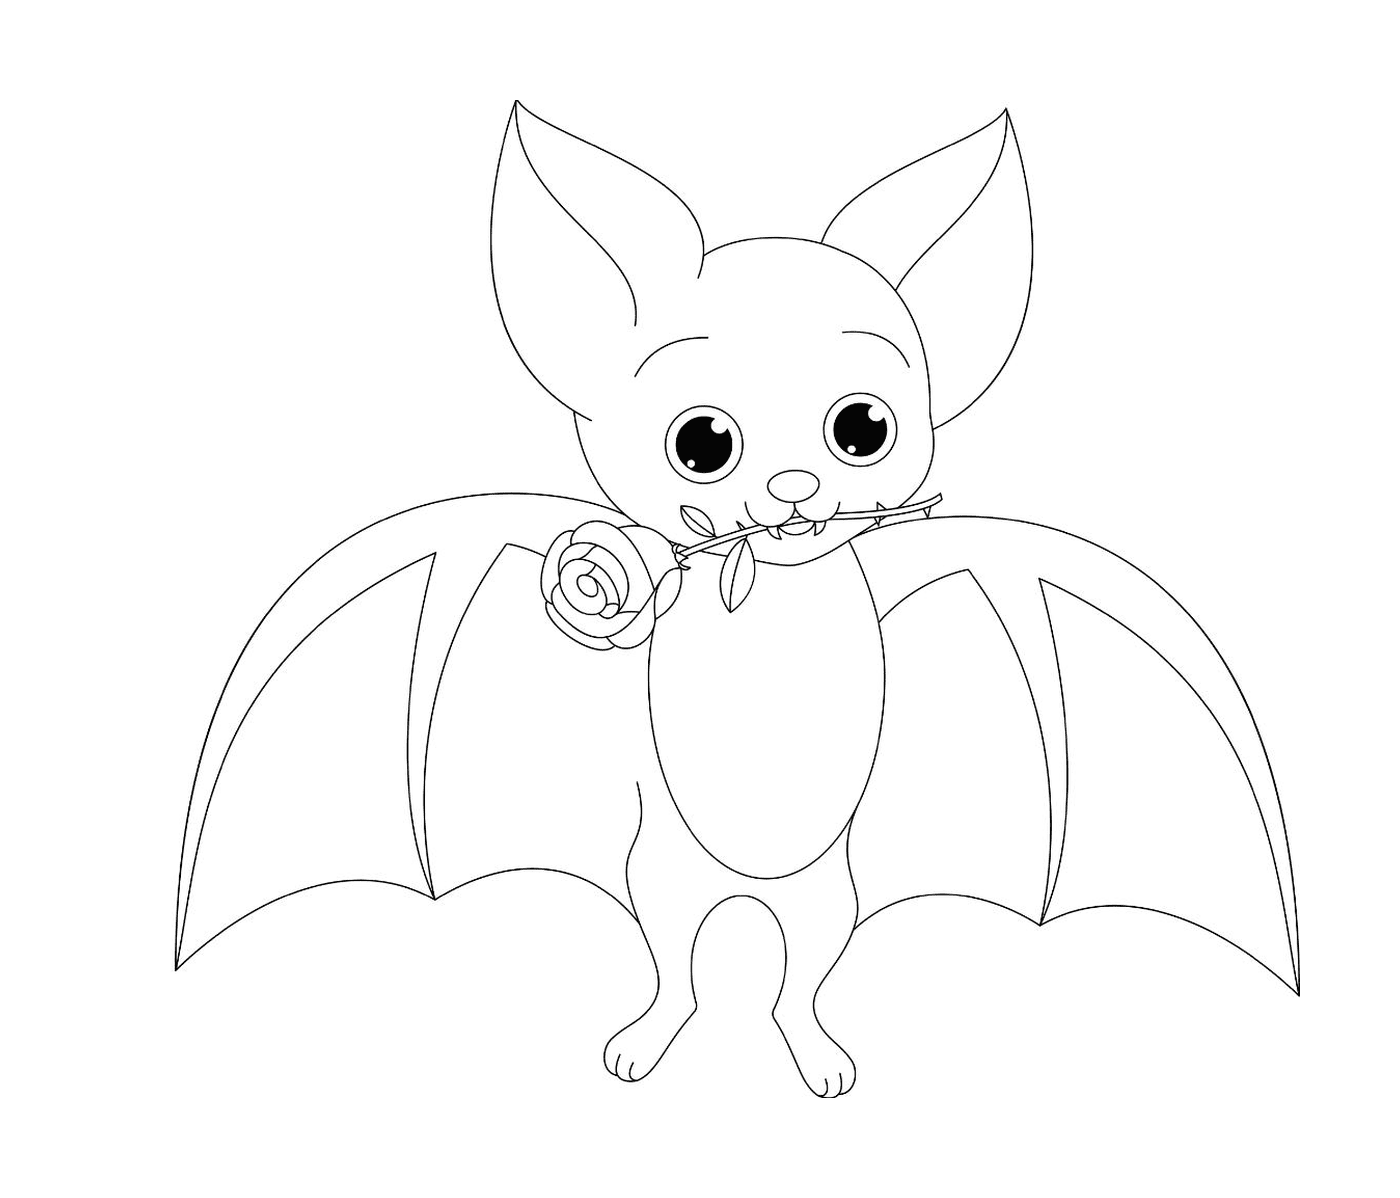  bat holding a rose 